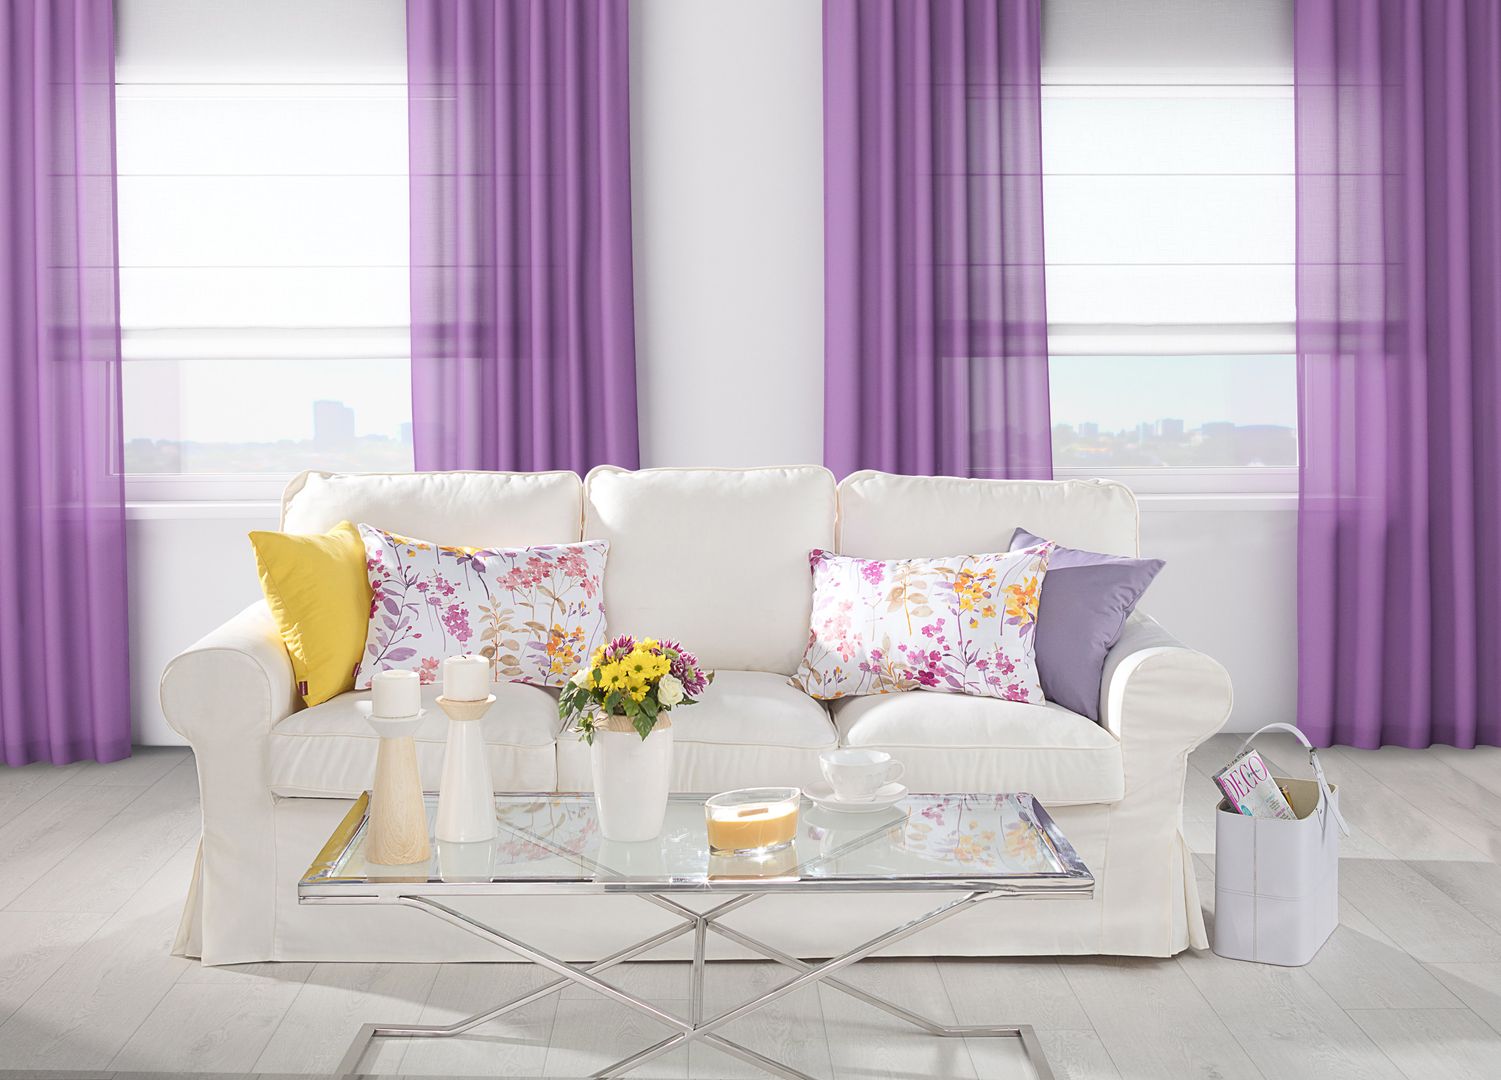 Redesign: Modern Shabby Chic Ultraviolet Living Room Dekoria.co.uk Salon rustique Textile Ambre/Or Accessoires & décorations